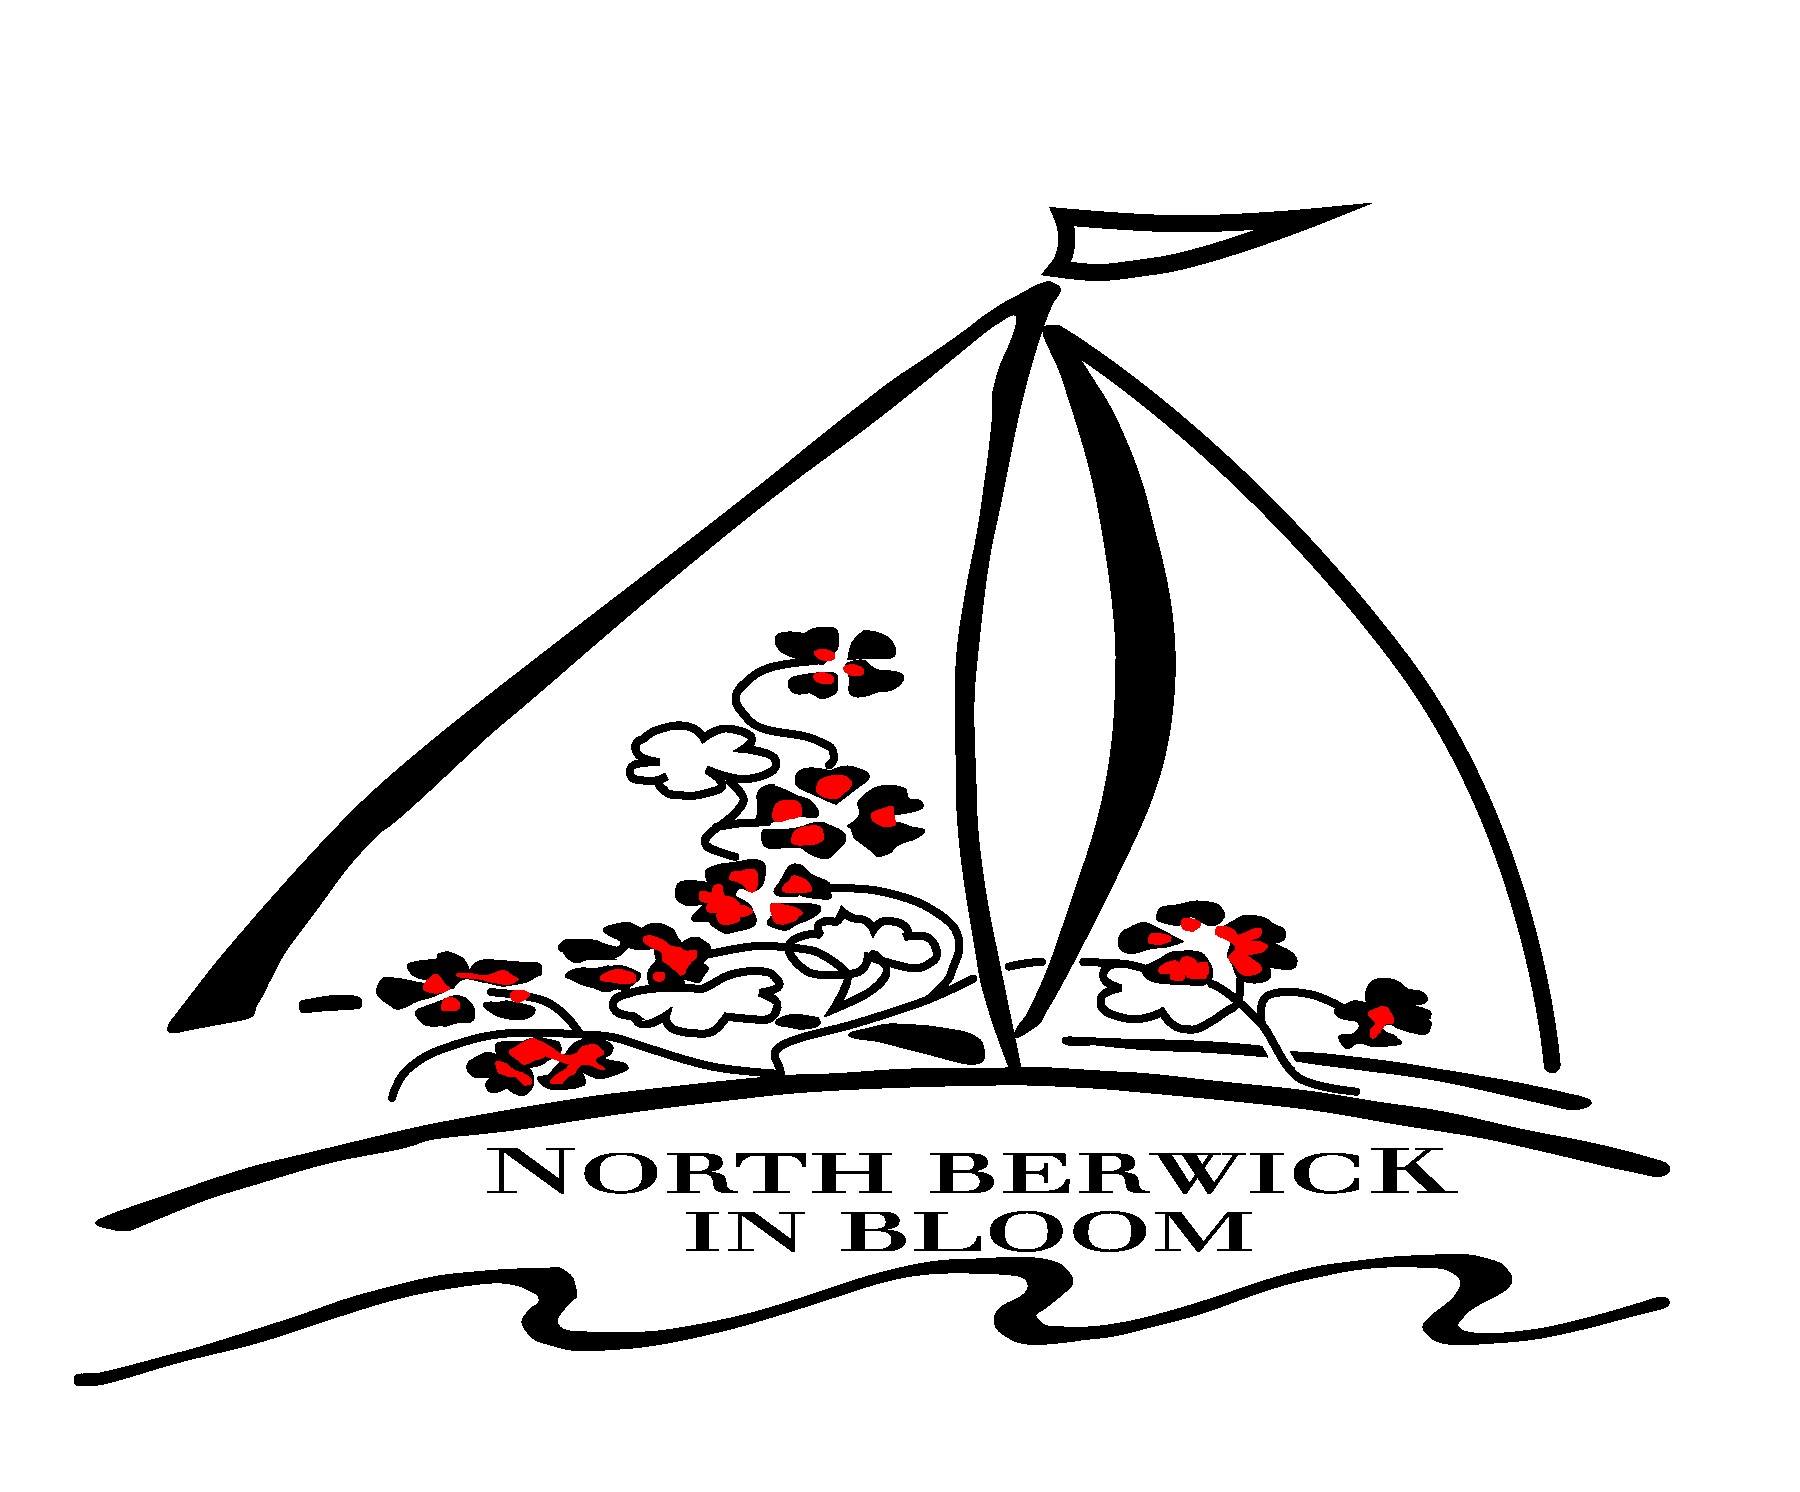 North Berwick in Bloom